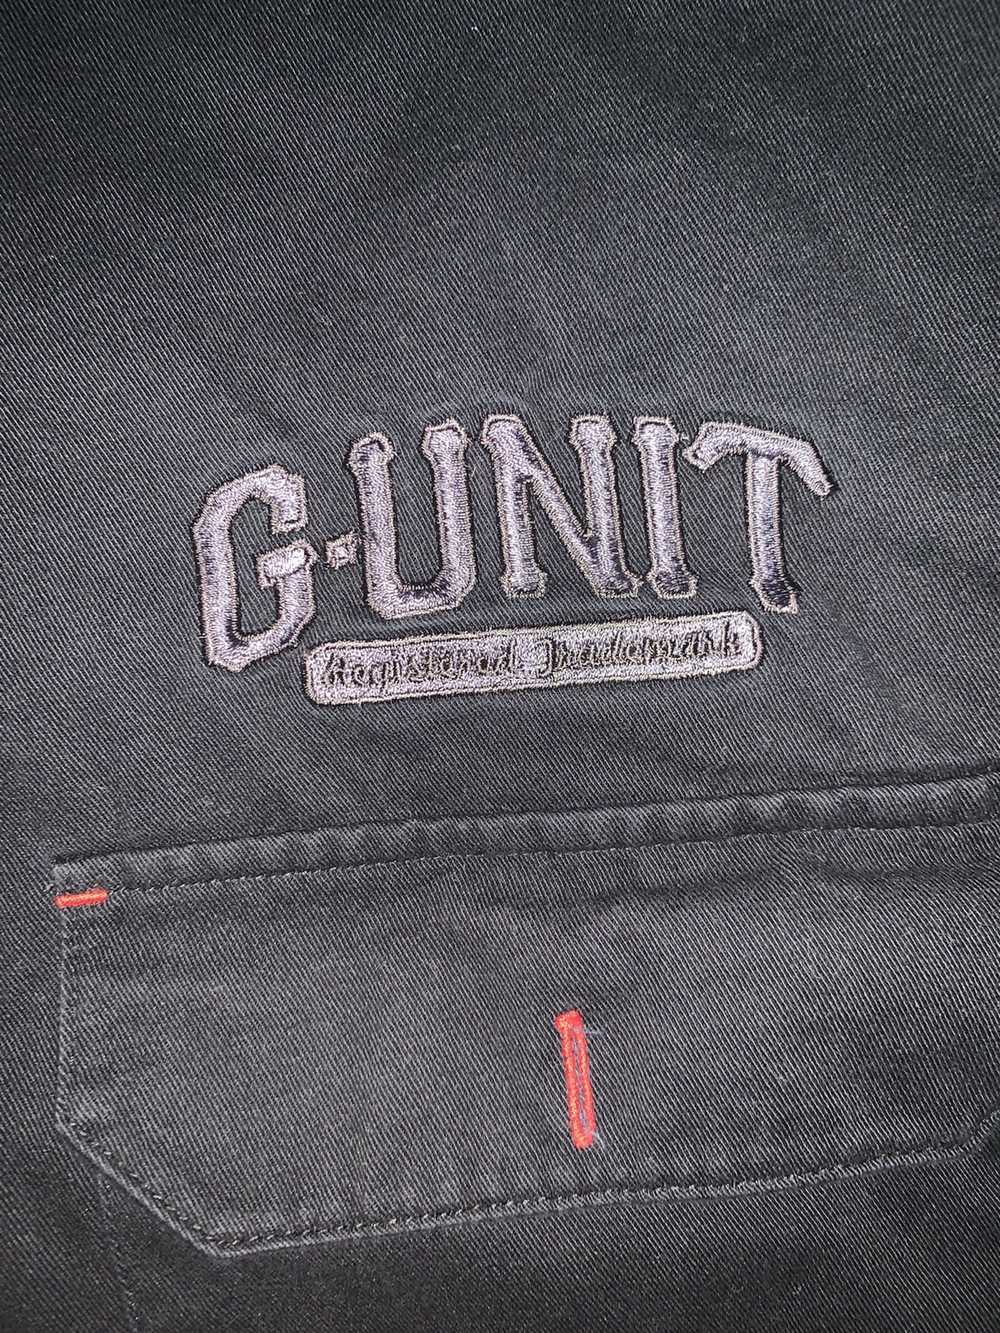 G Unit G-Unit Mechanic - image 2